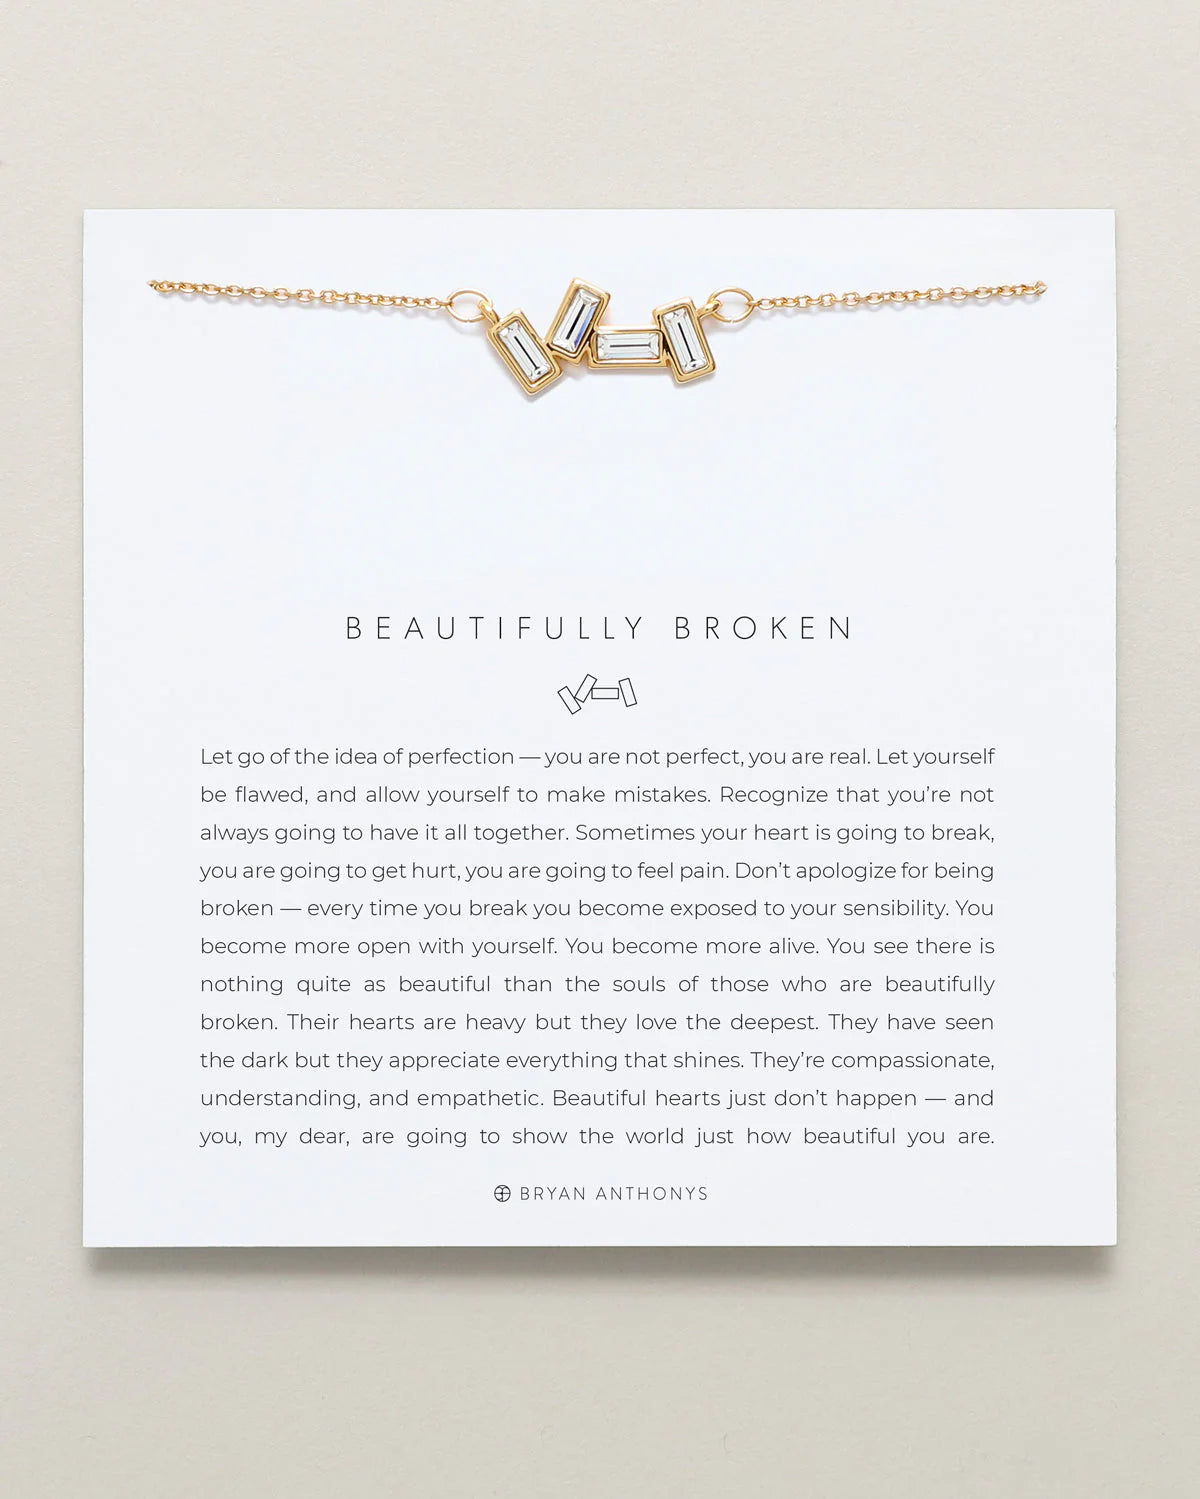 Beautifully Broken Necklace - Bryan Anthony's